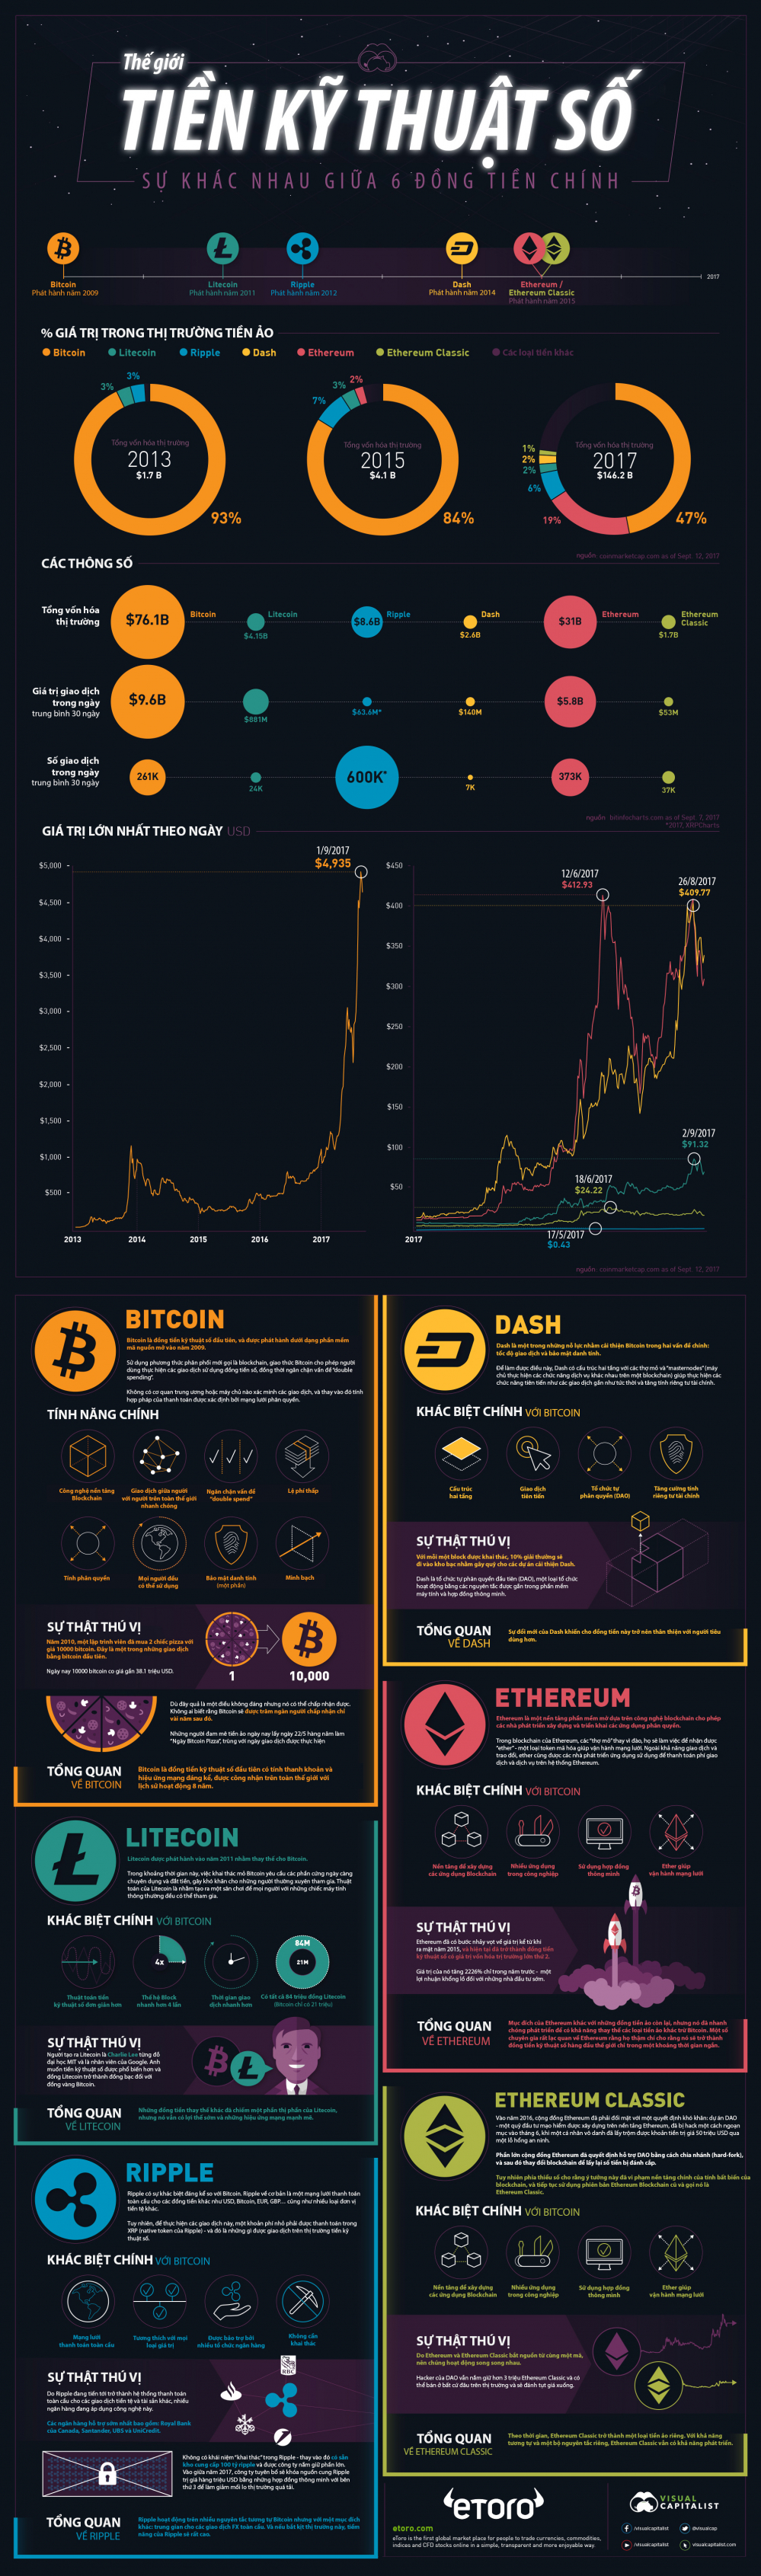 infographic-bitcoin-ethereum-comparison (doc)